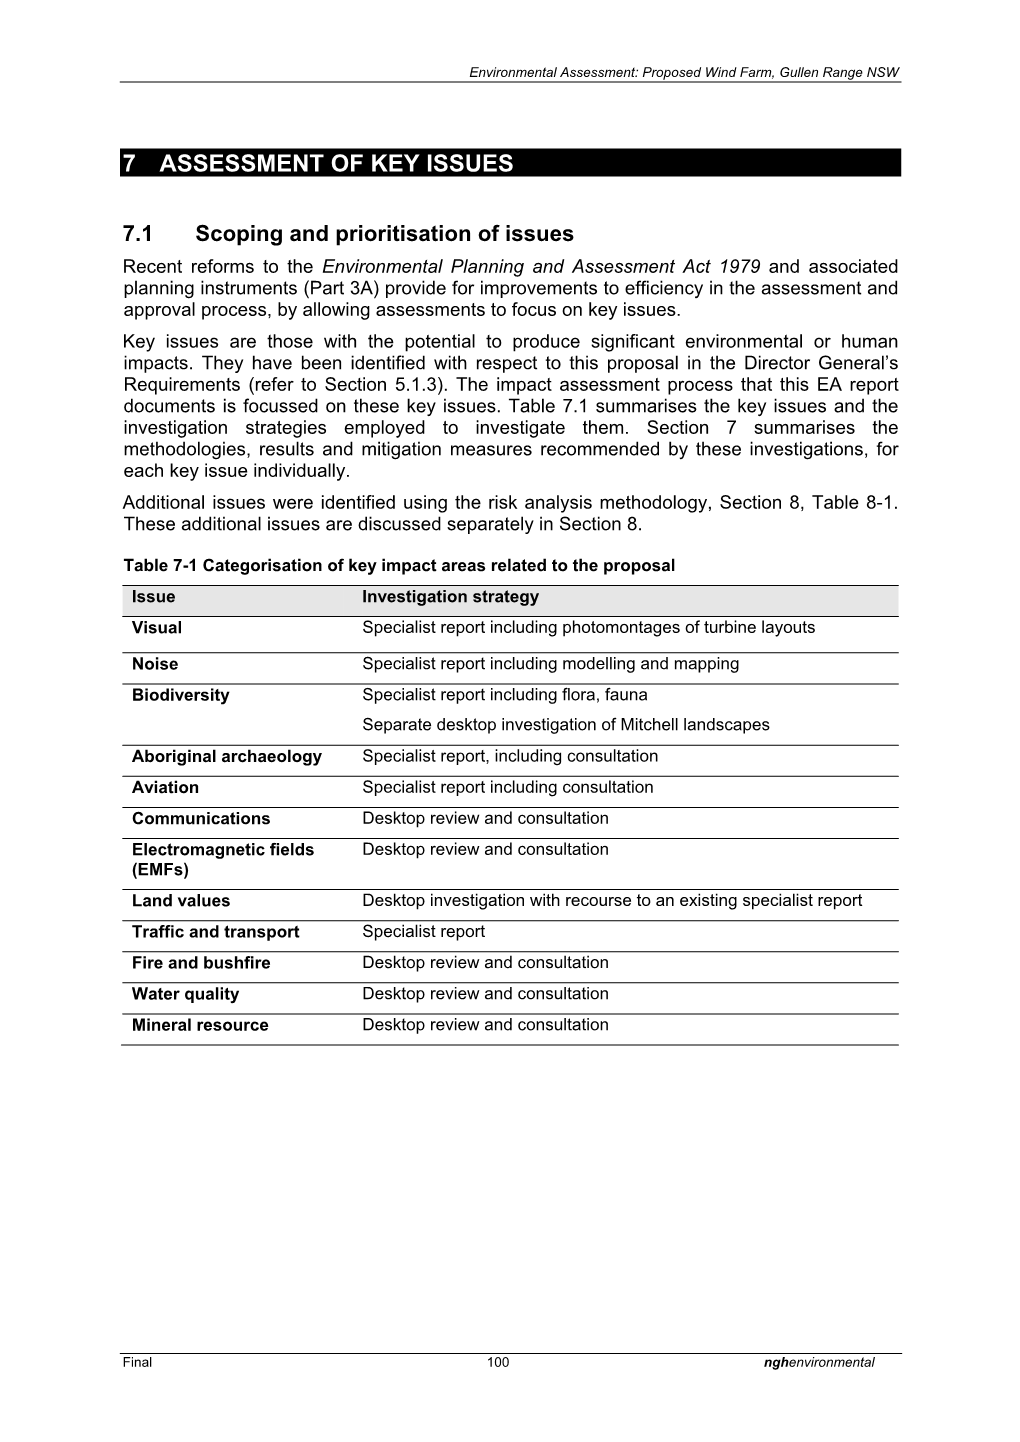 Environmental Assessment Sections 7